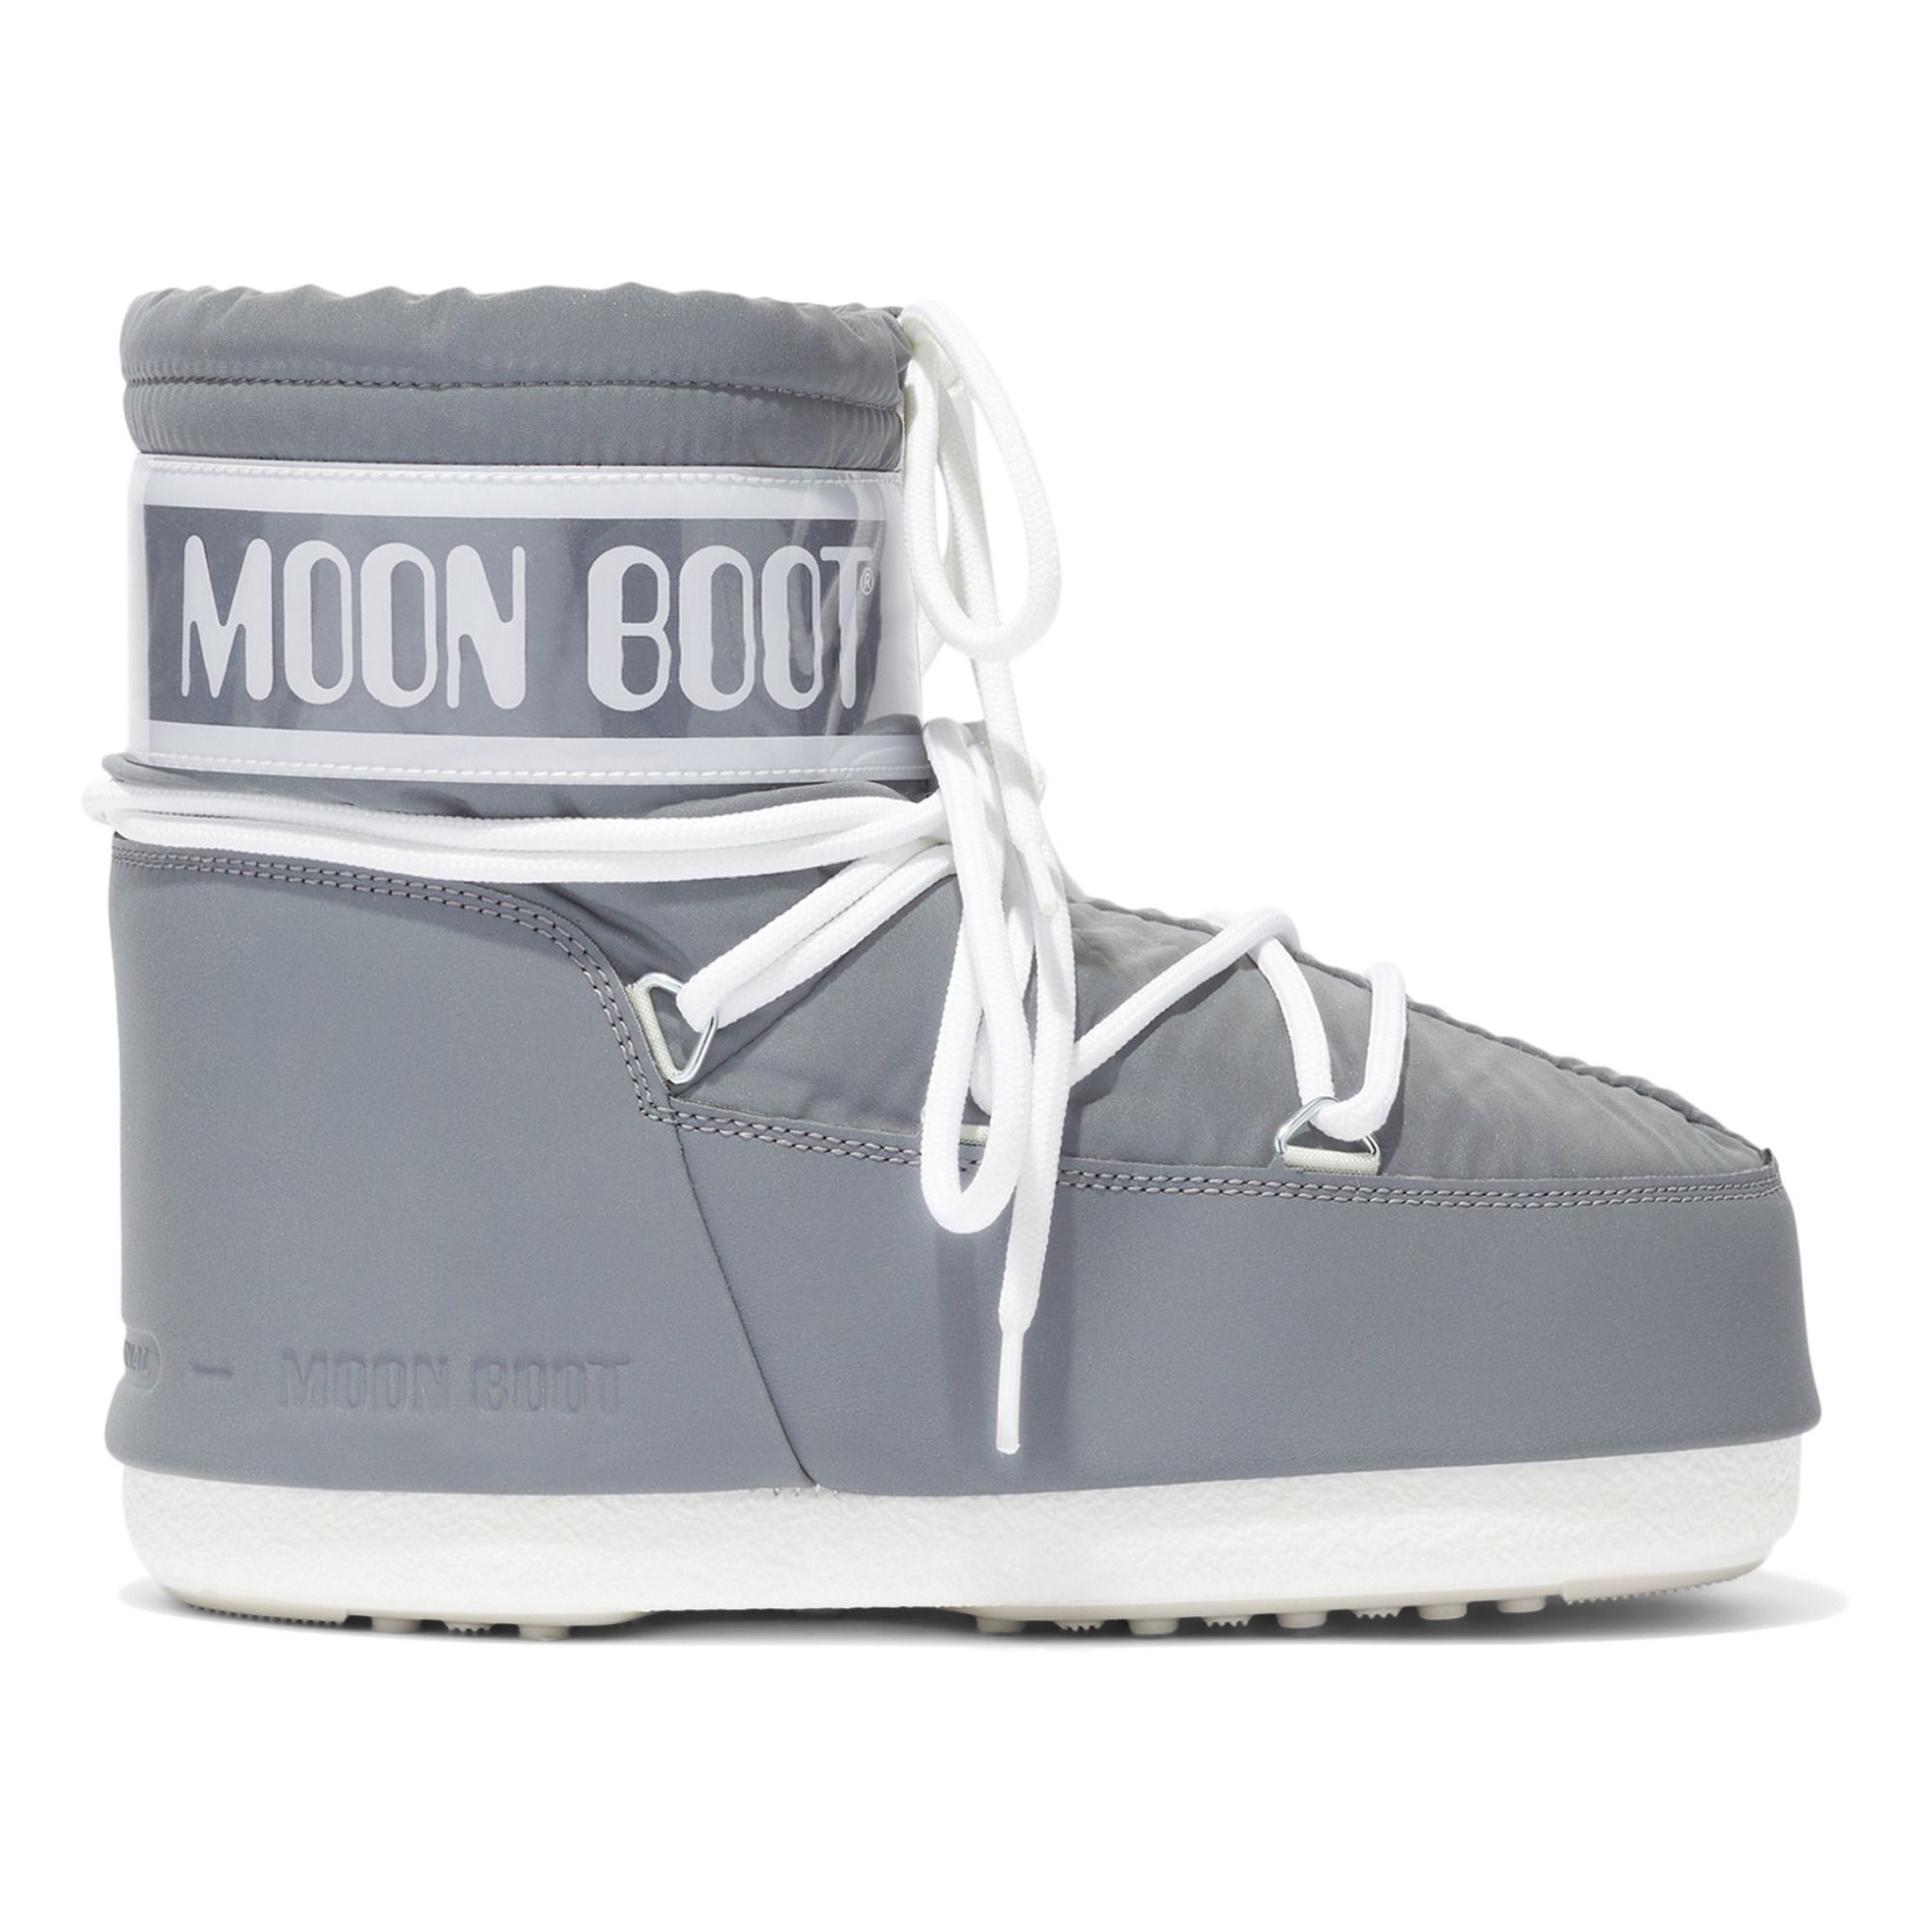 Moon Boot - Moon Boot Basses Reflex - Collection Femme - - Argenté